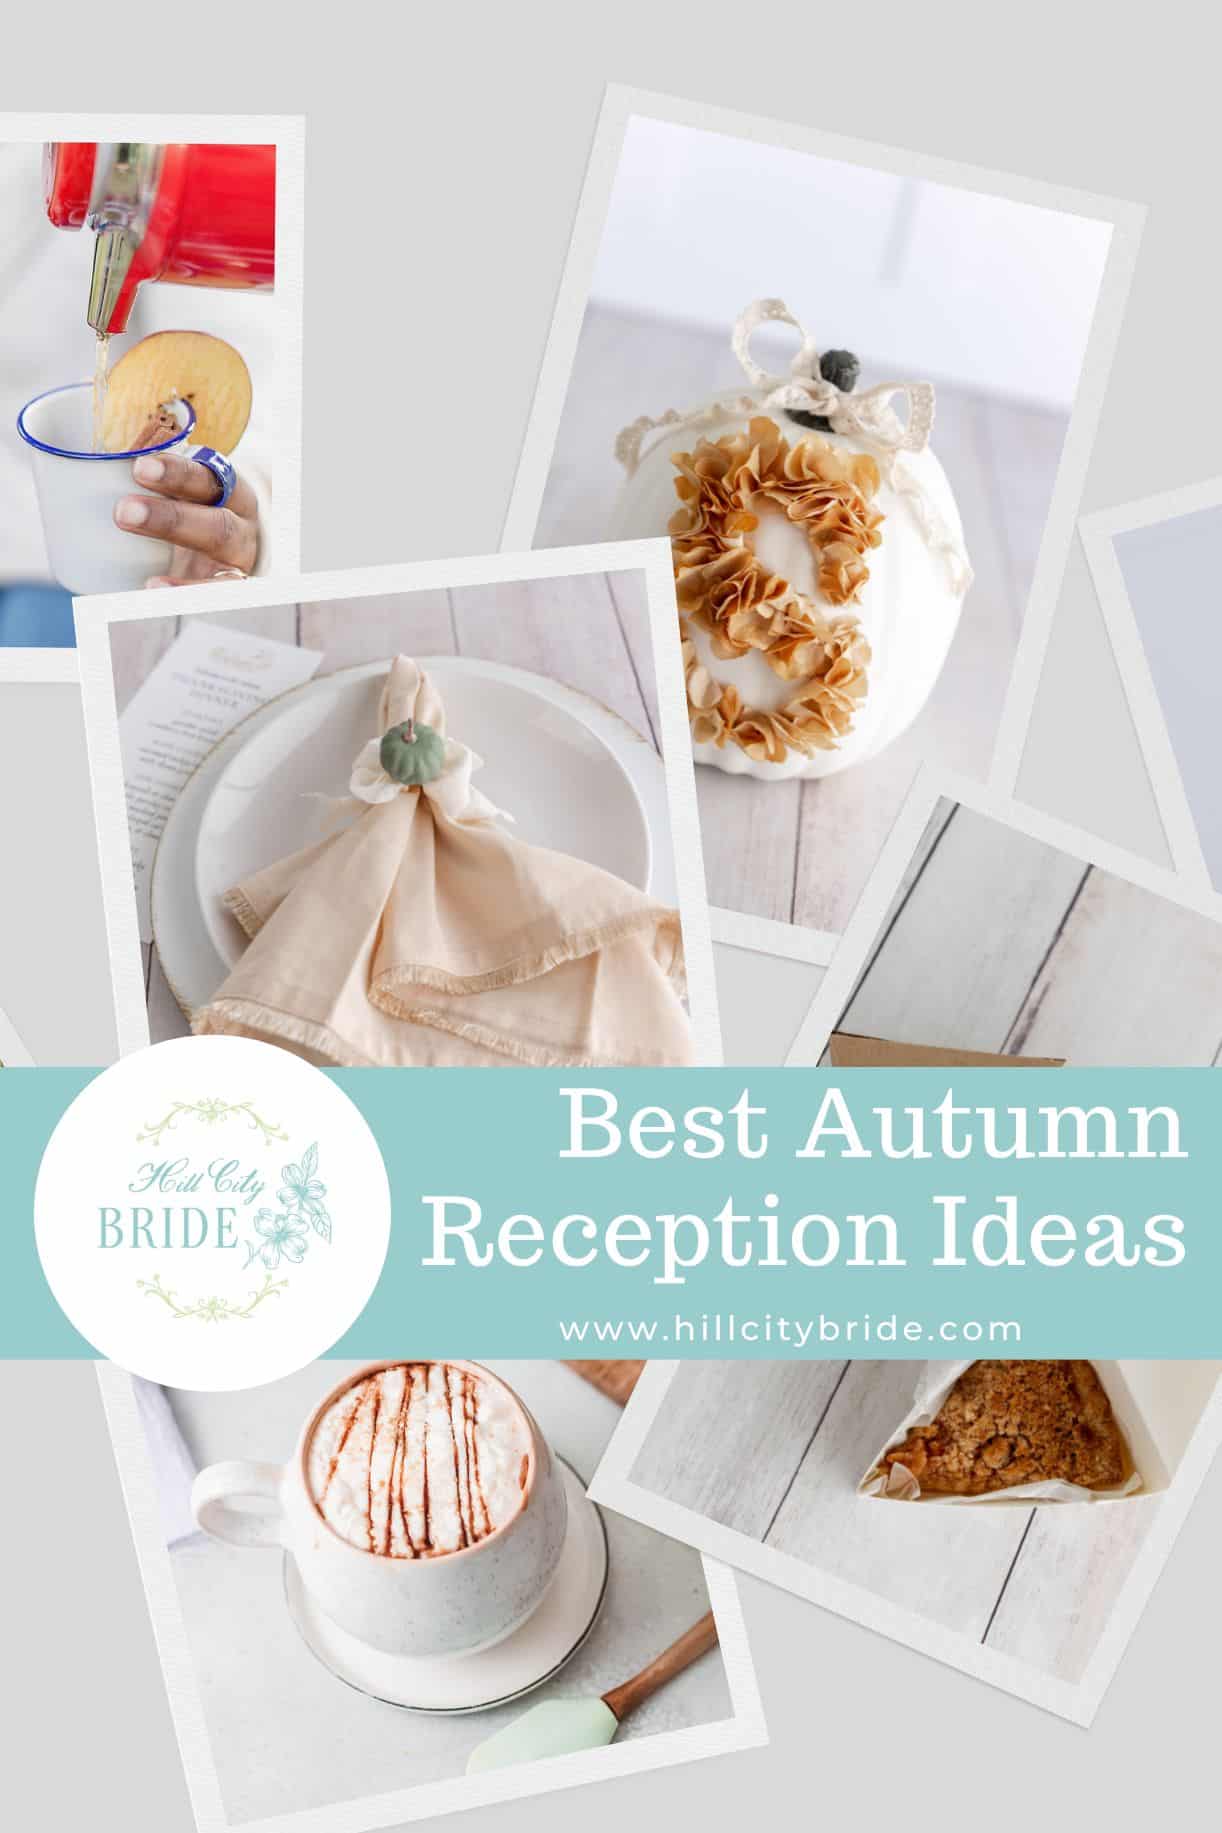 Ideas for an Autumn Wedding Reception